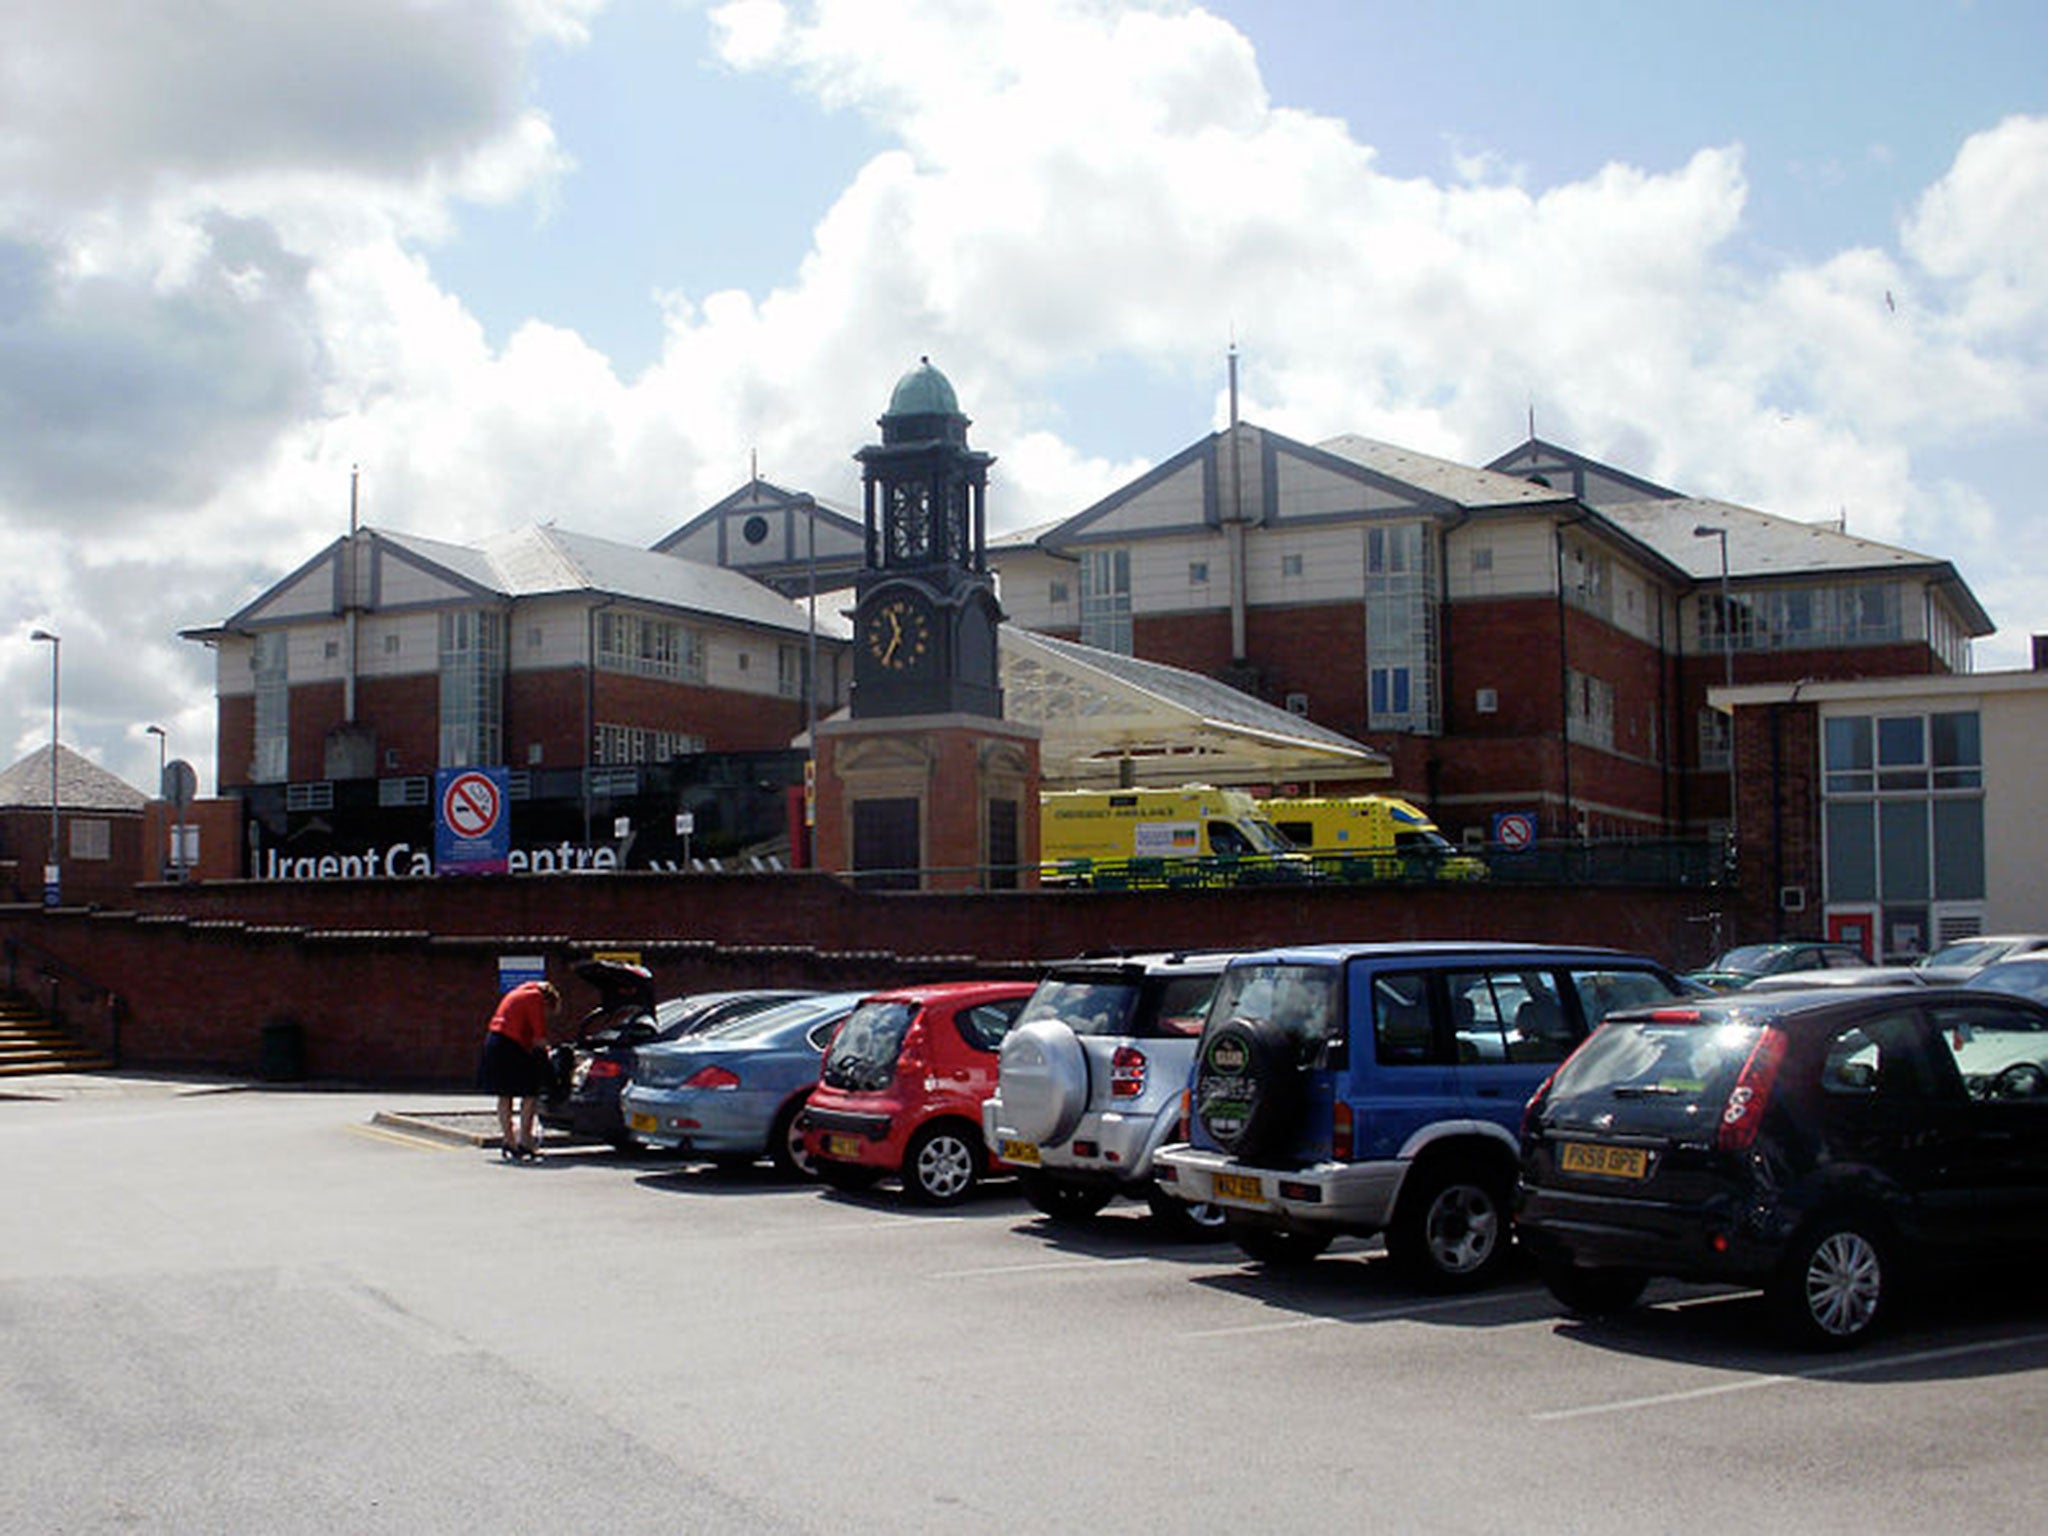 Blackpool Victoria Hospital, where the victim died